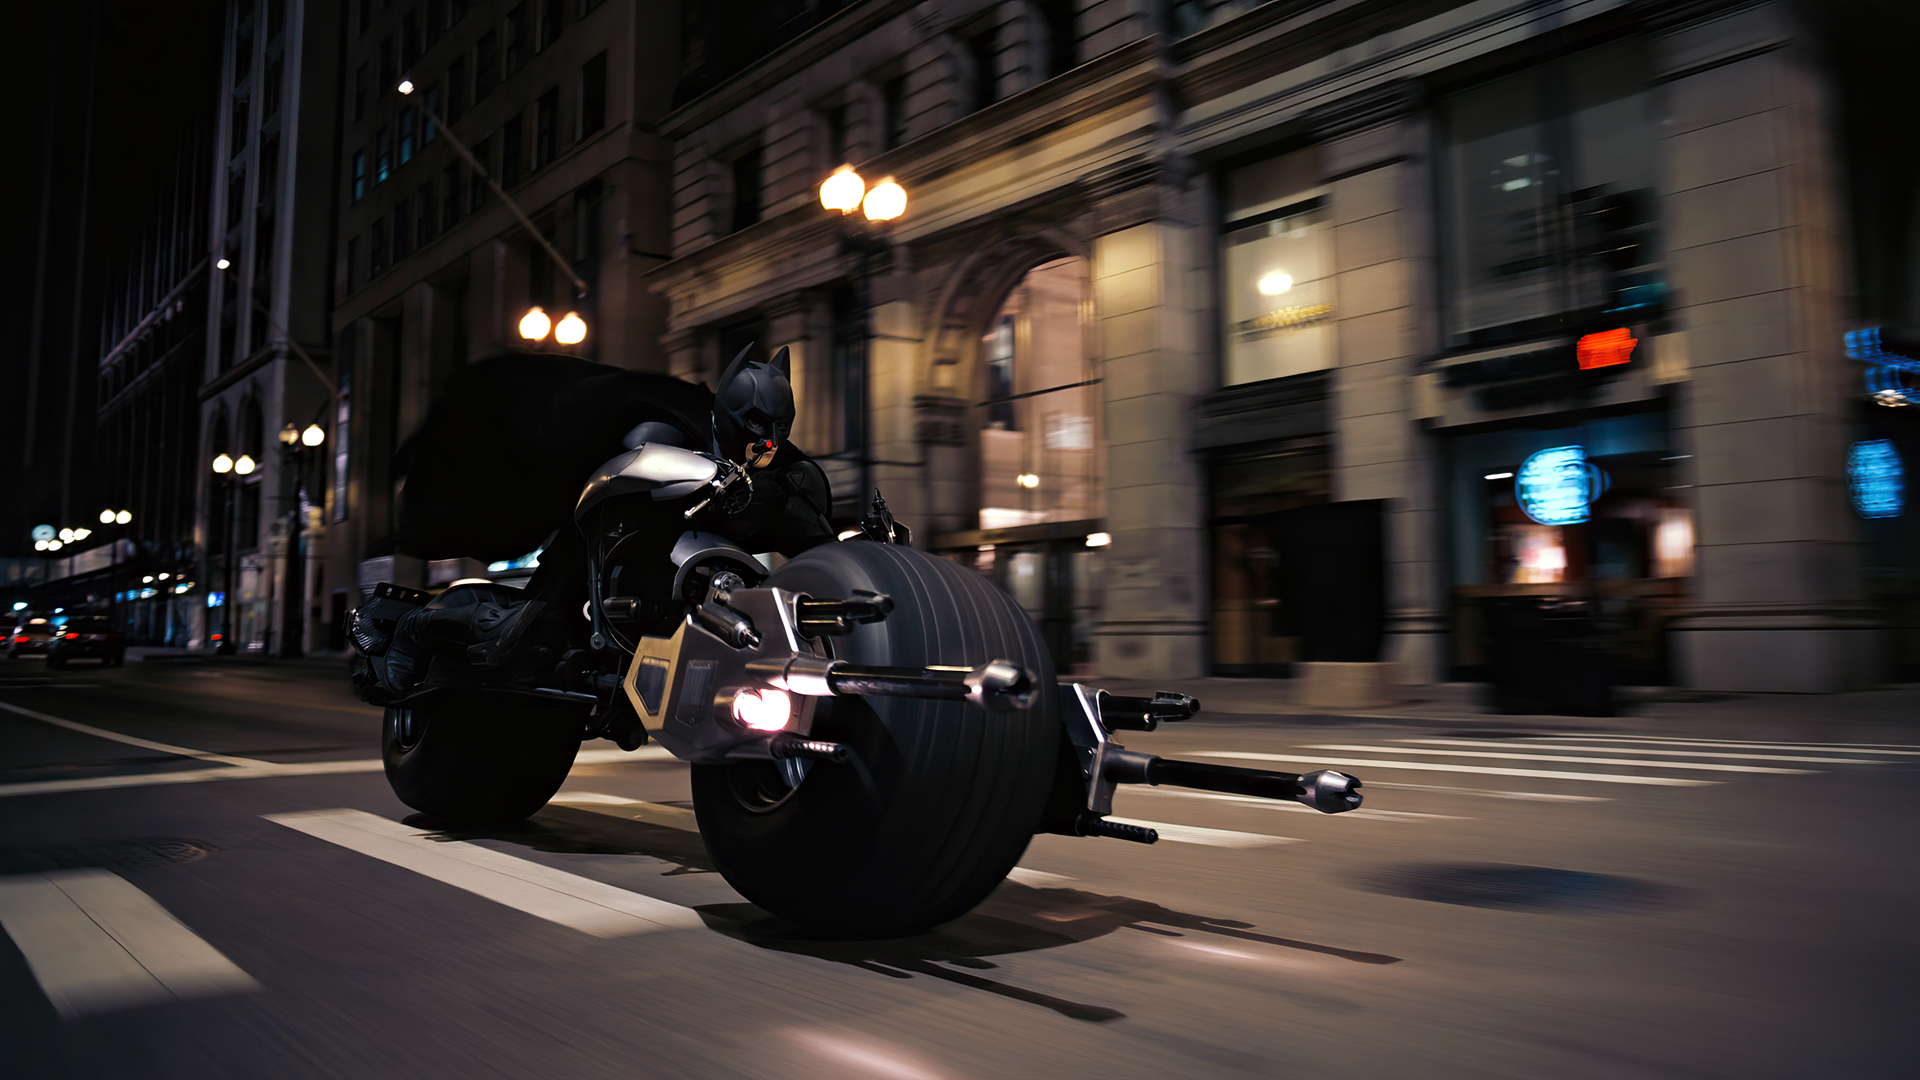 General 1920x1080 The Dark Knight movies film stills Batpod street Gotham City Batman superhero vehicle building Christopher Nolan